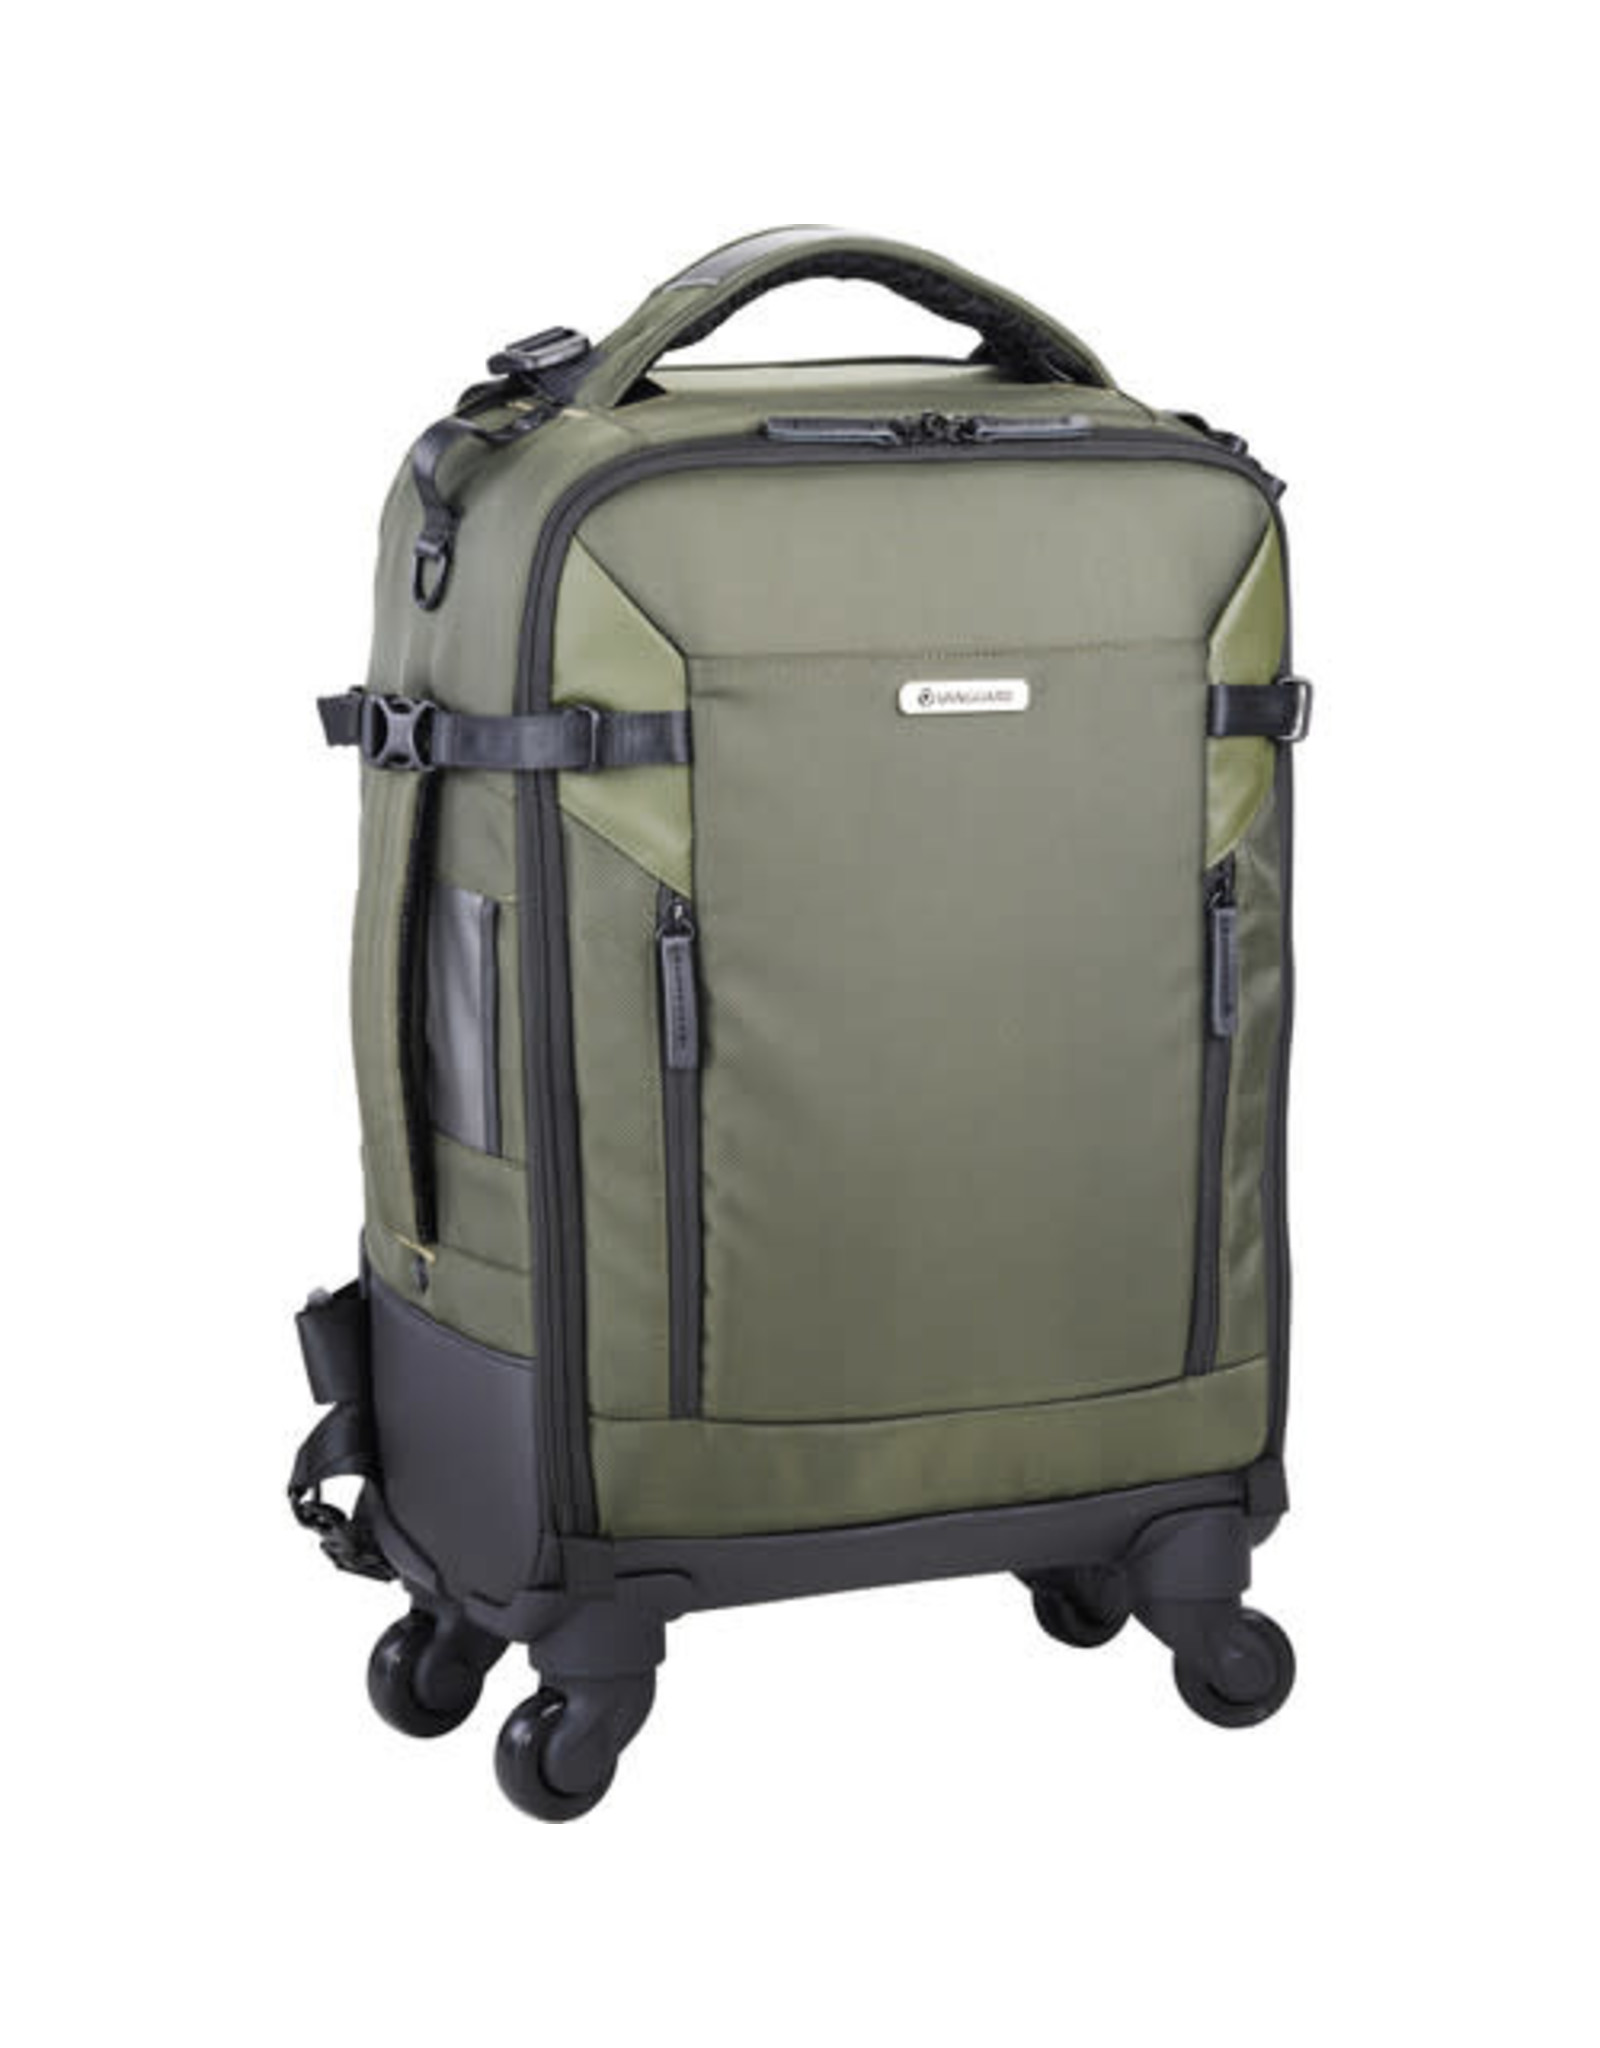 Vanguard Vanguard VEO SELECT 55T Trolley Backpack (Choose Color)